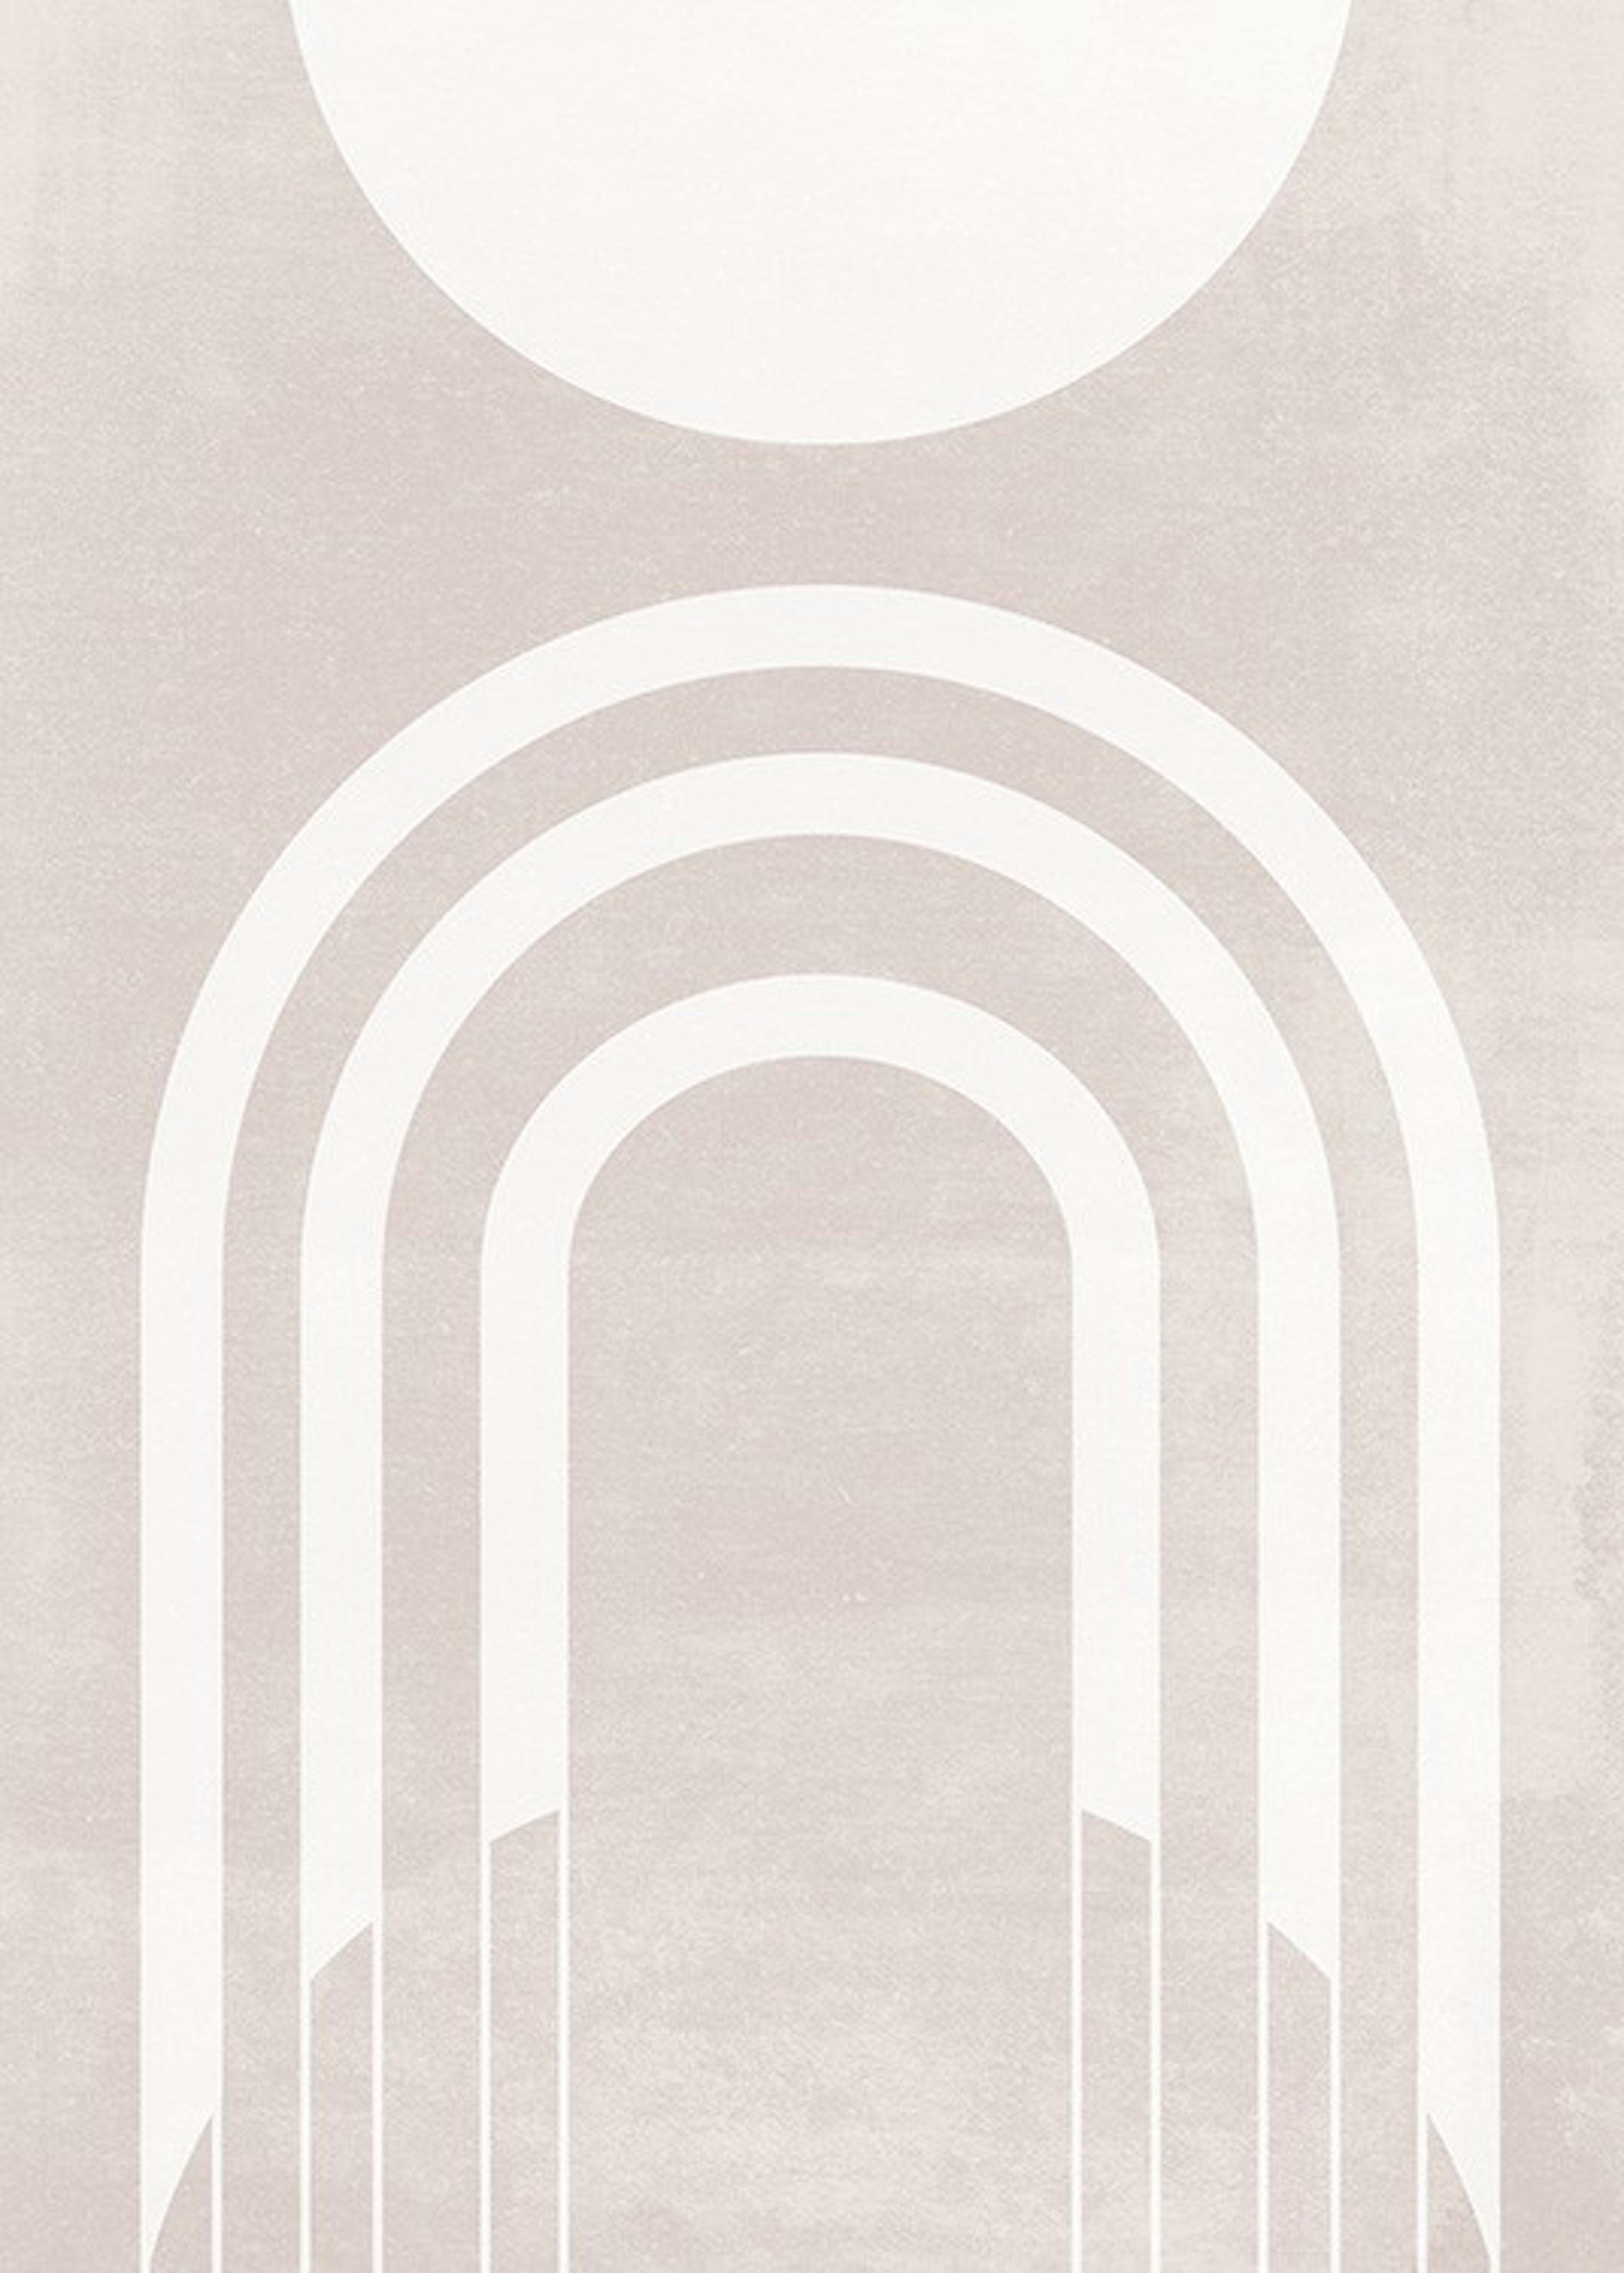 White Arches No1 Poster 0